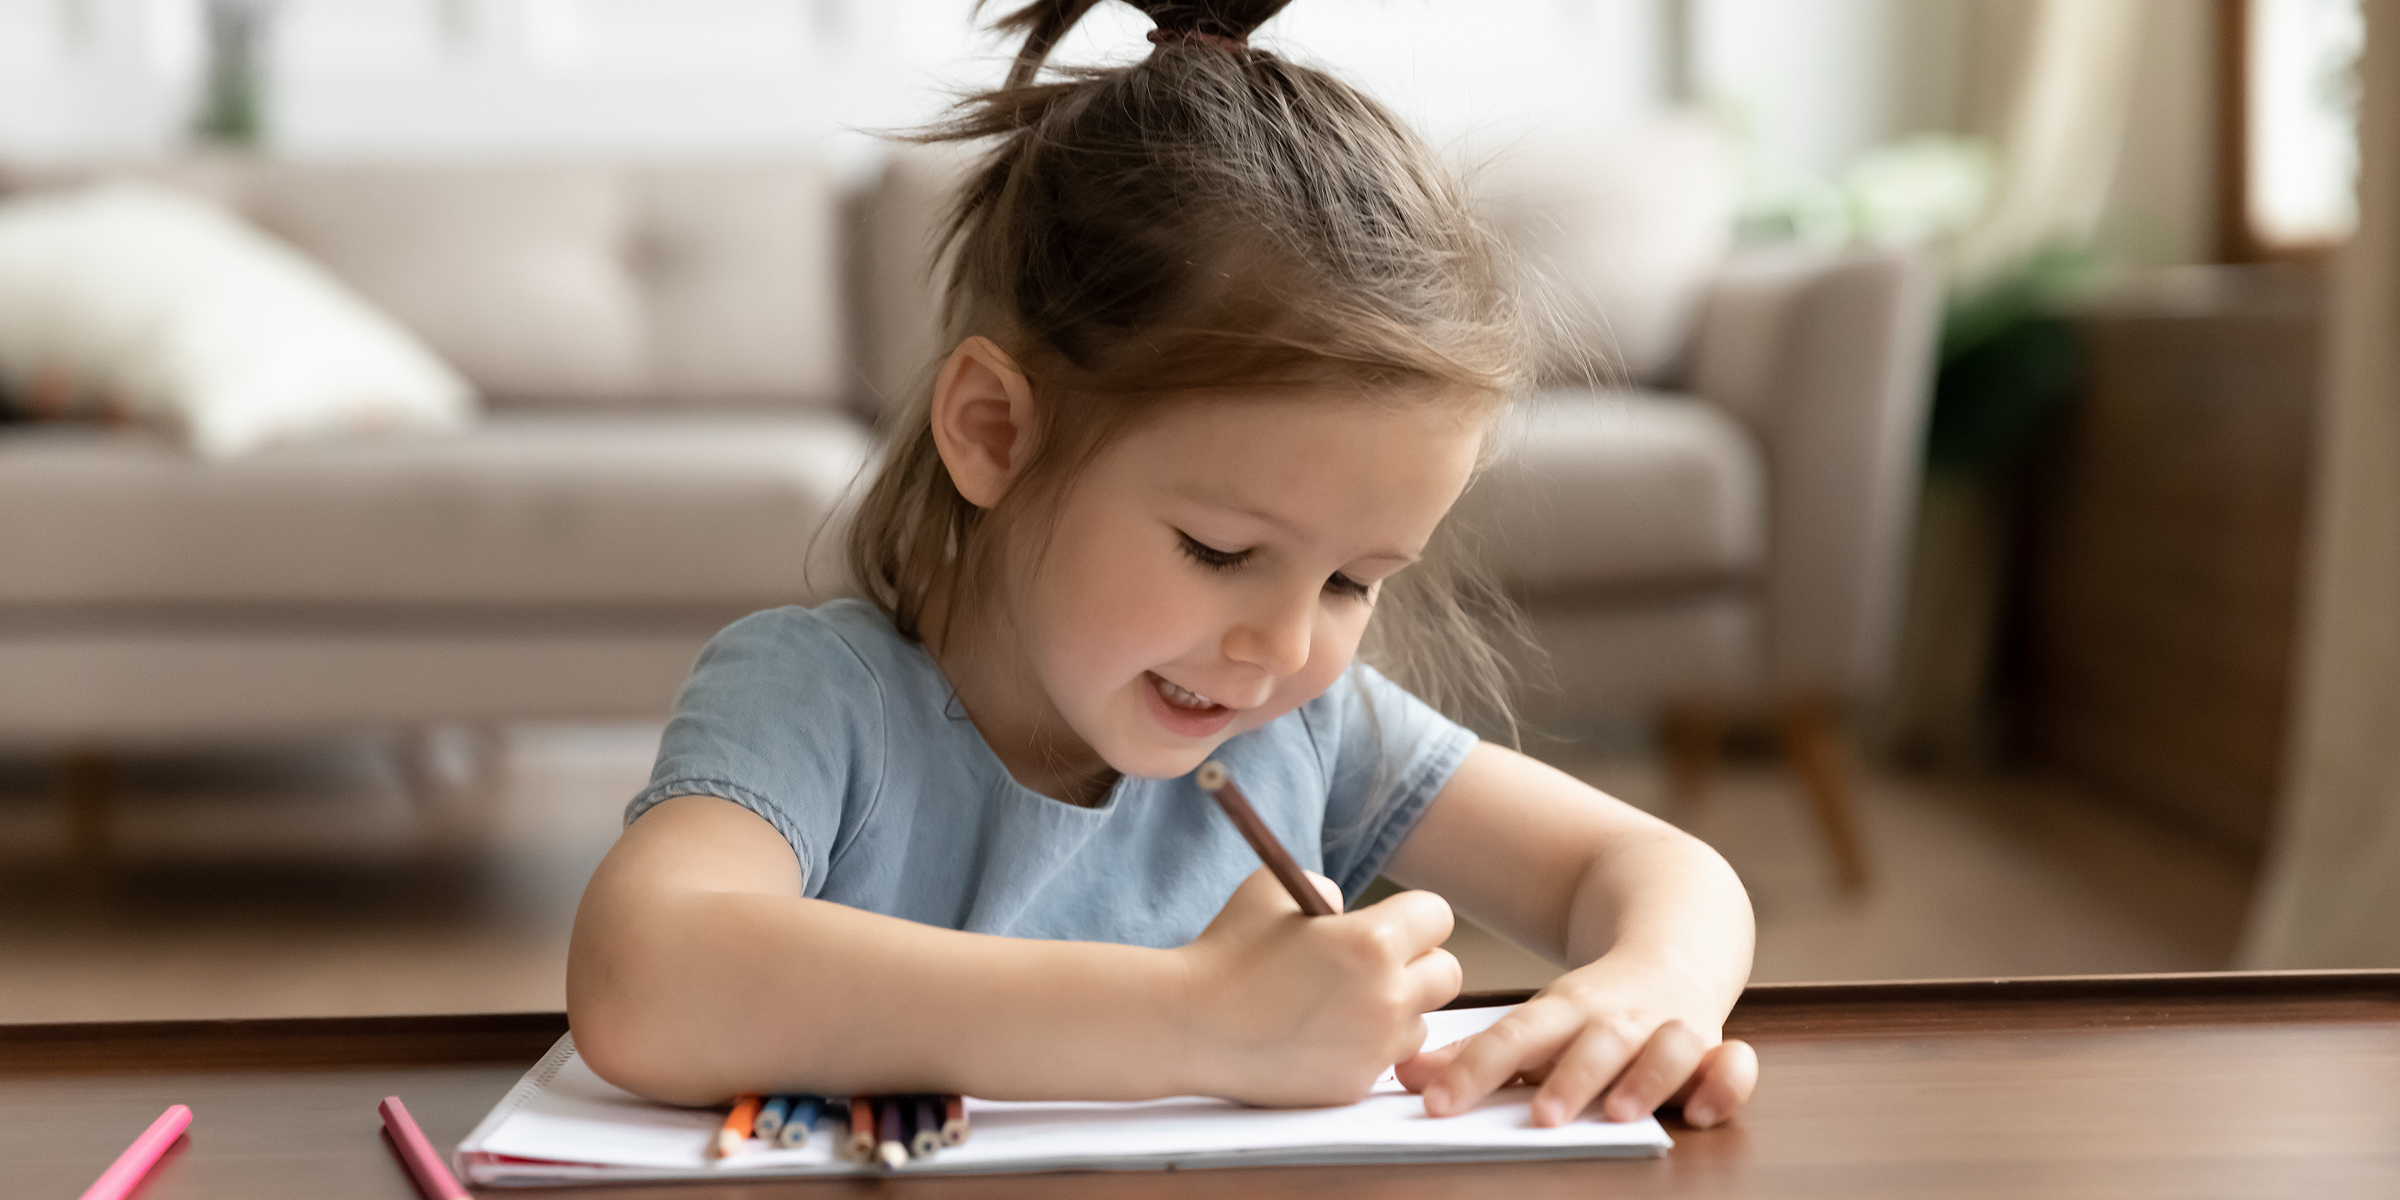 Une petite fille en train de dessiner | Source : Shutterstock